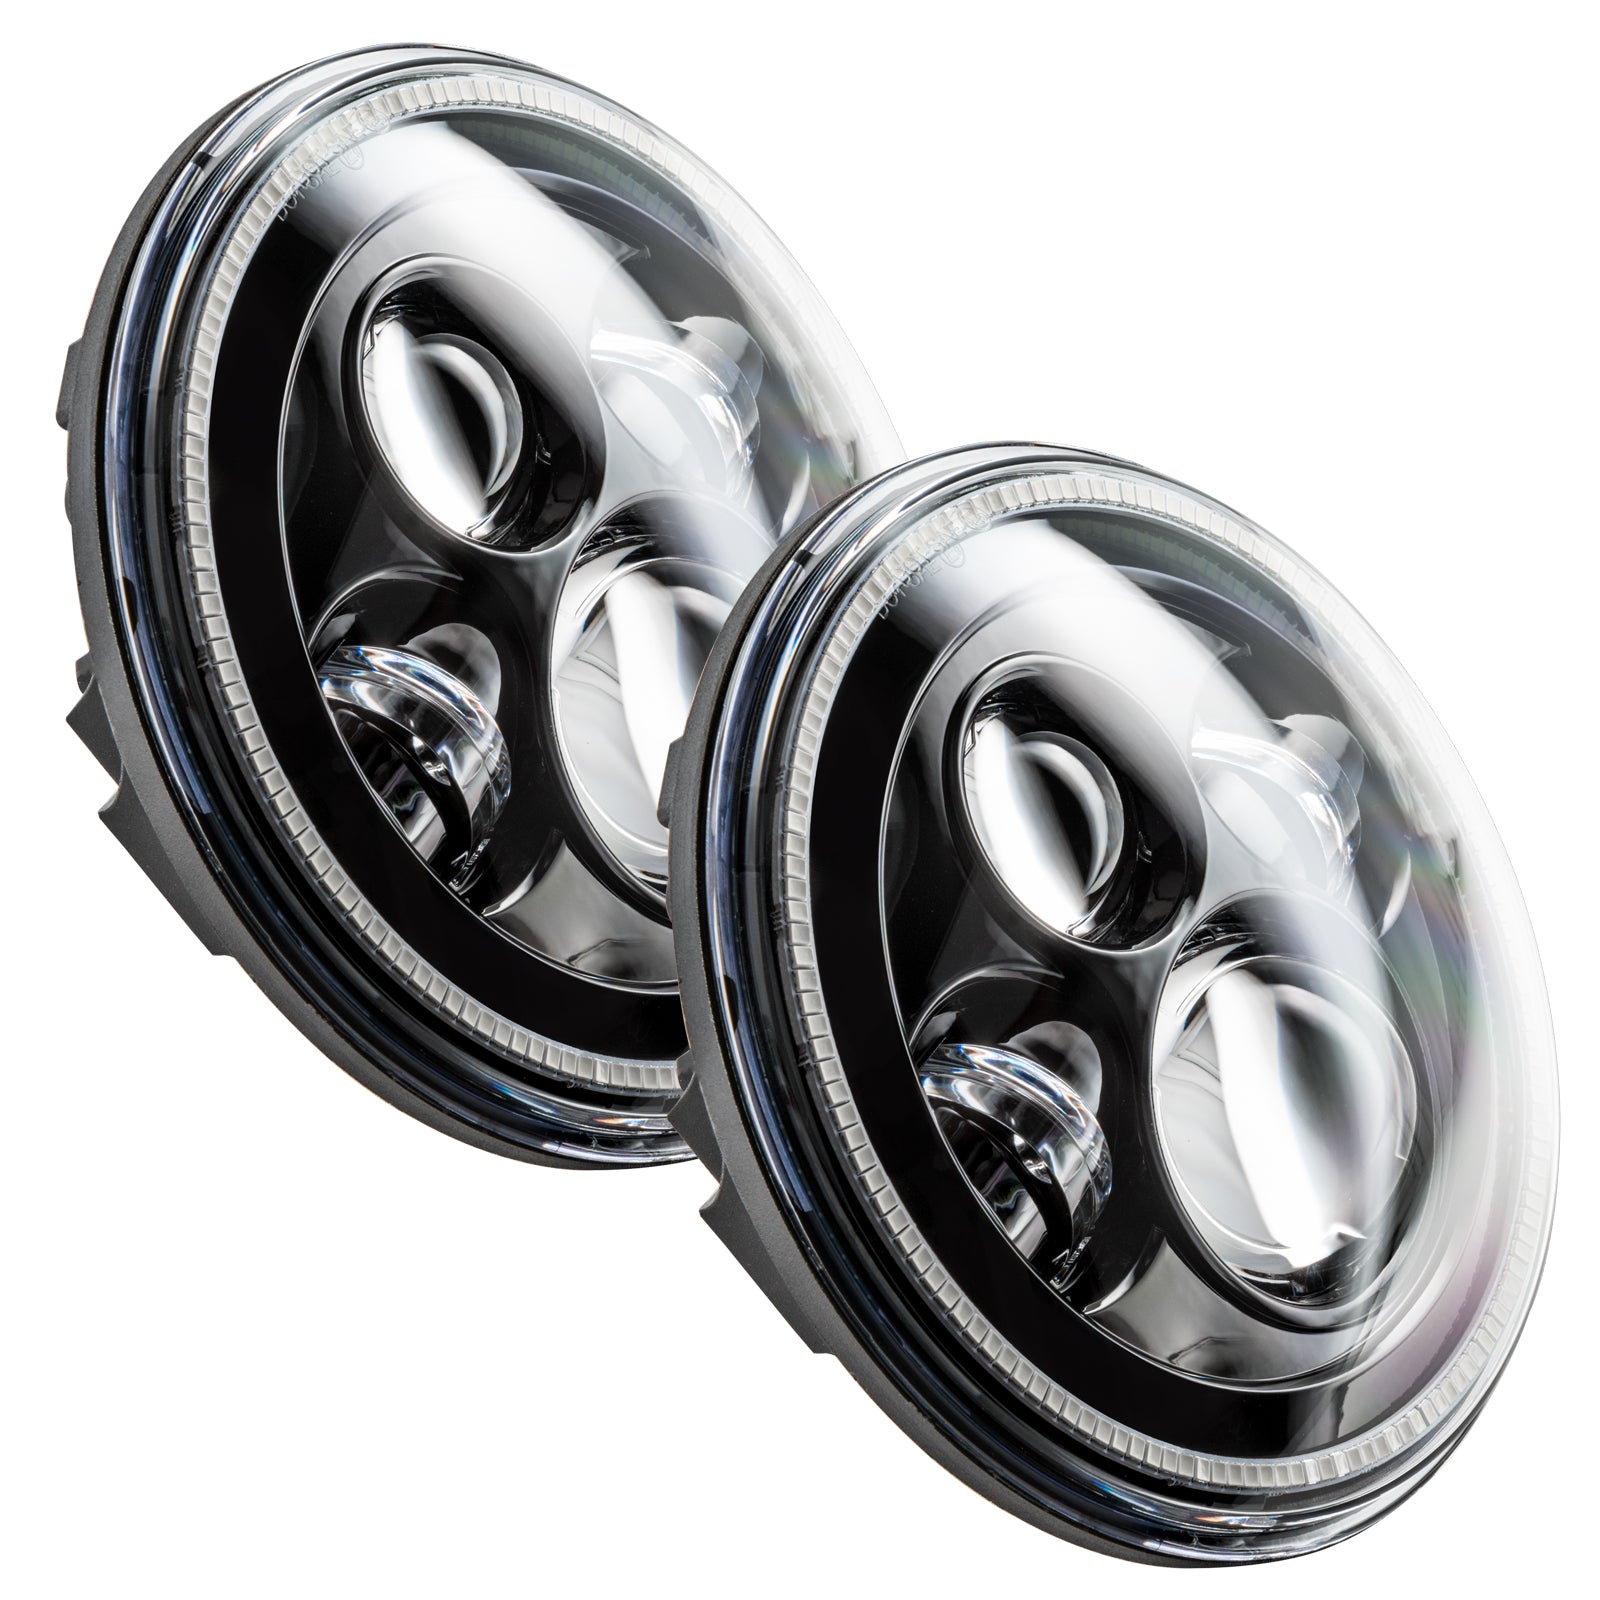 ORACLE Lighting 7" High Powered LED Headlights - Black Bezel